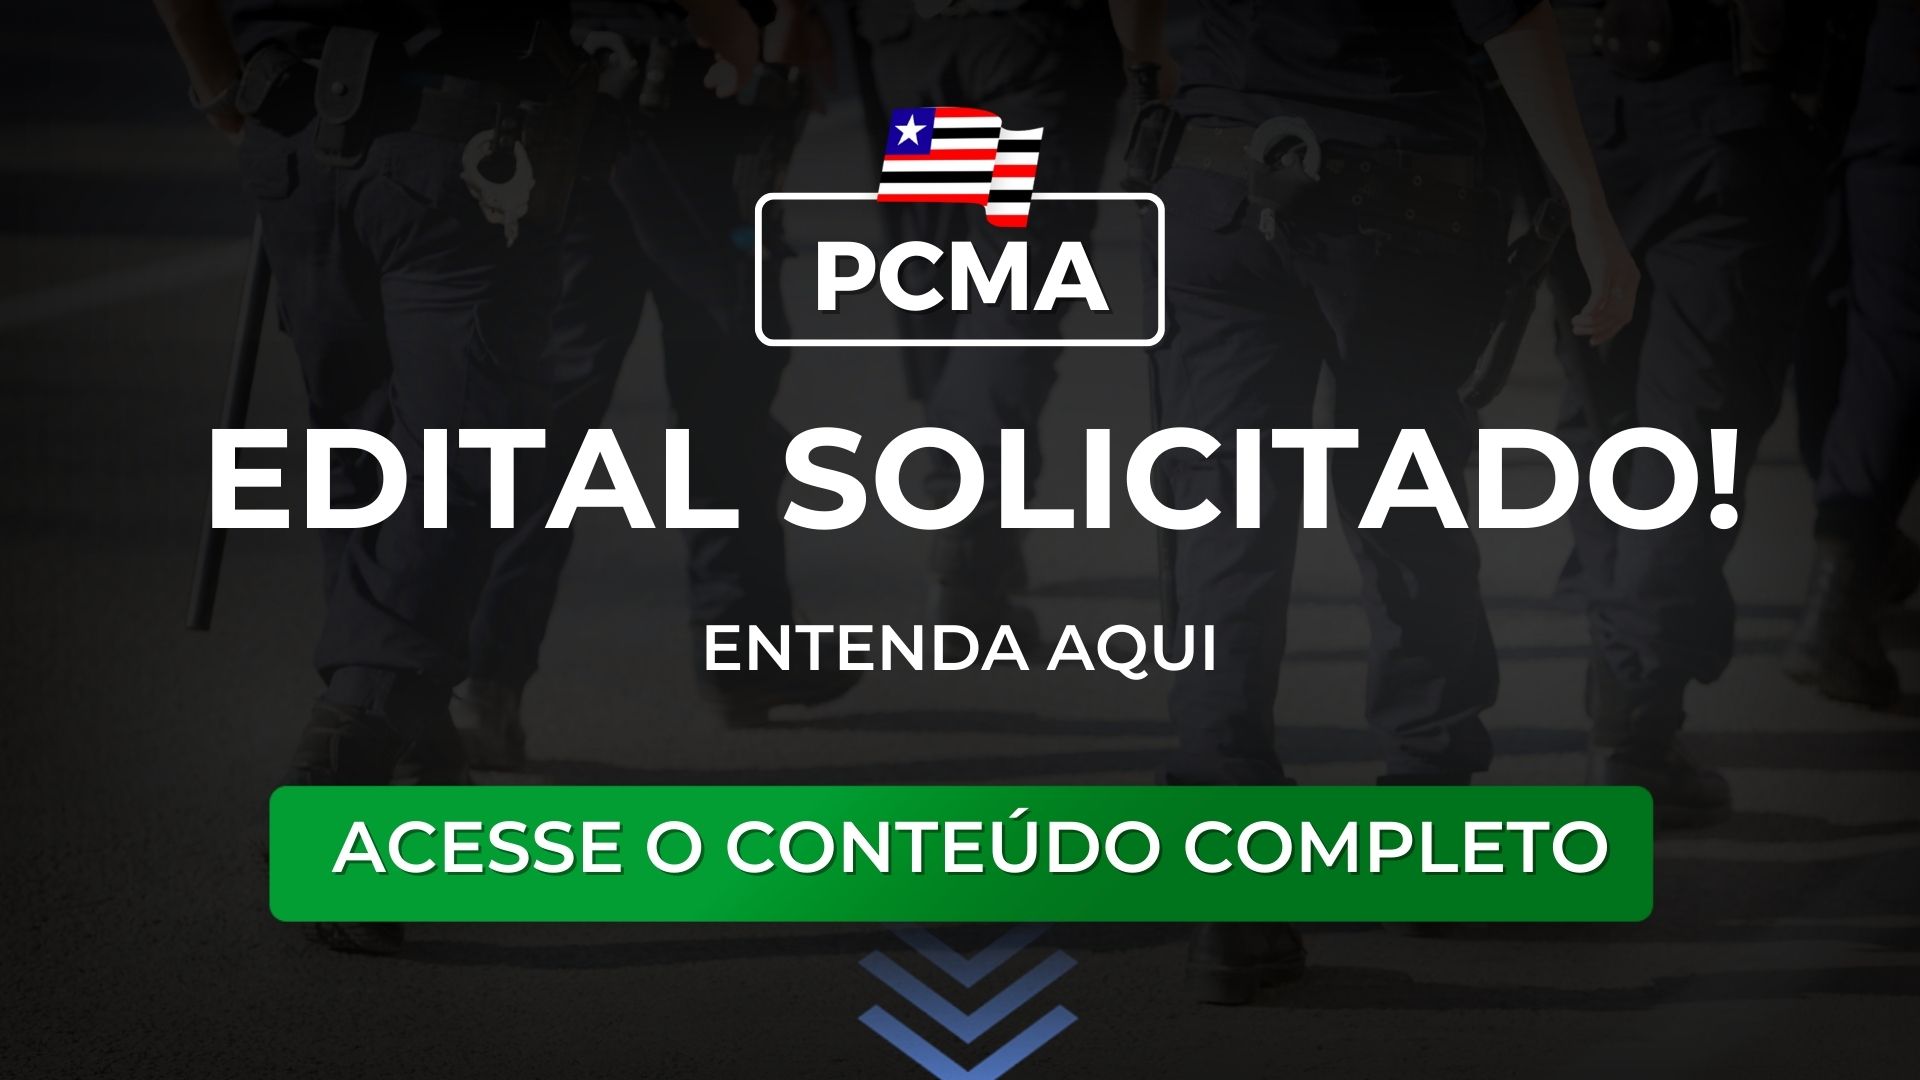 PCMA: edital para Delegado de Polícia solicitado. Entenda aqui!